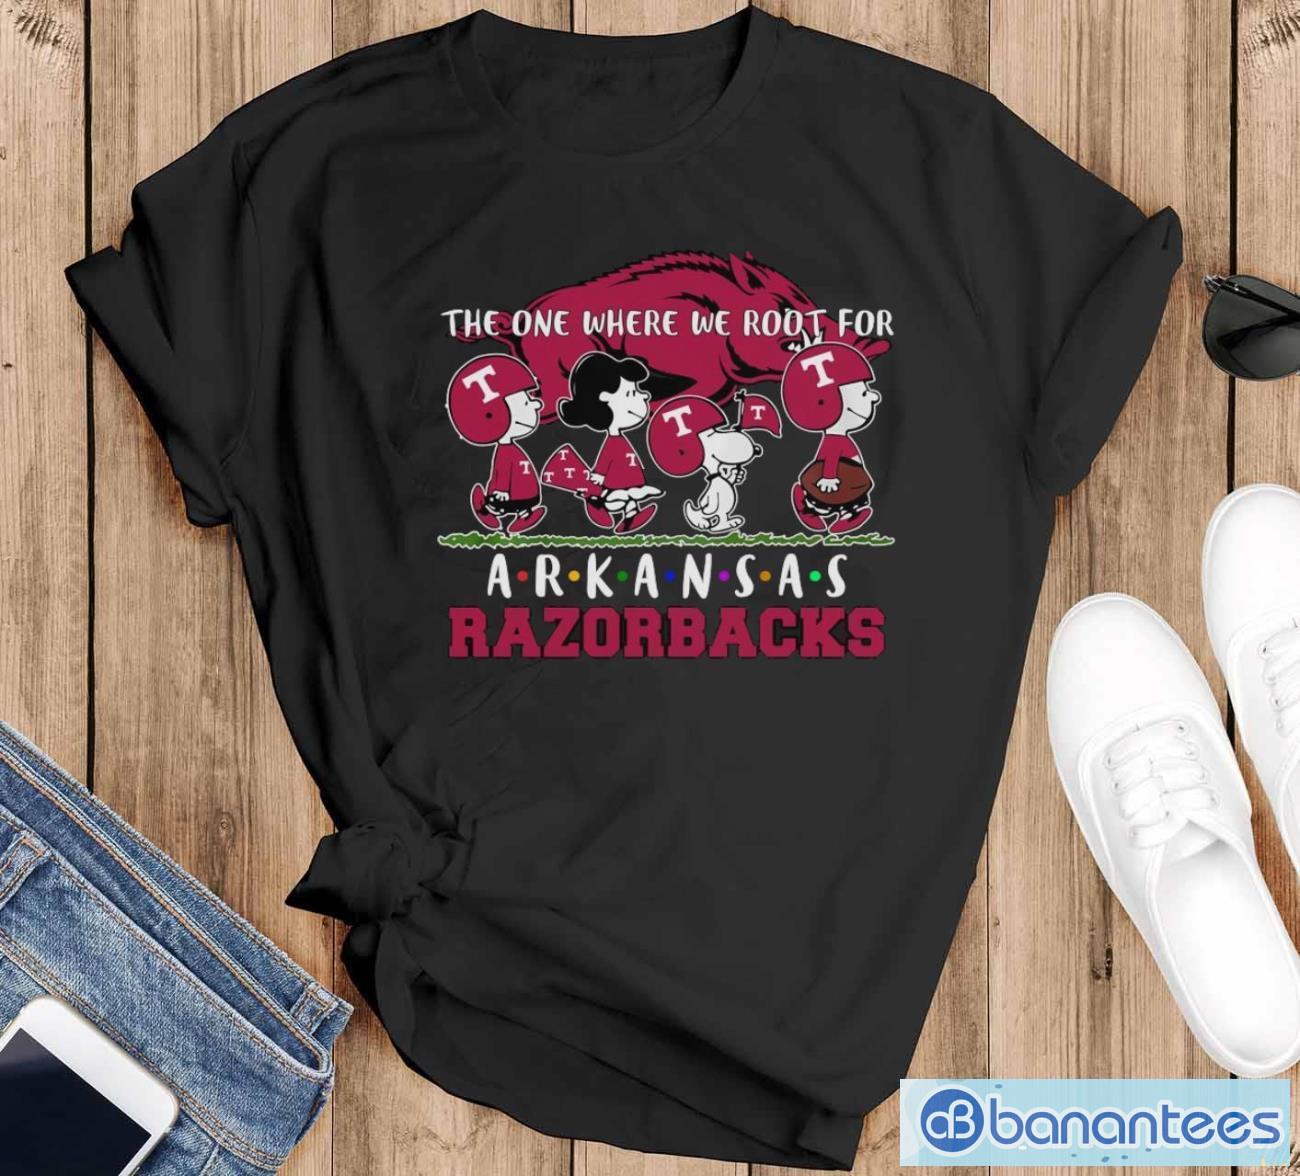 Snoopy And Woodstock Peanuts The One Where We Root For Arkansas Razorbacks Shirt - Black T-Shirt